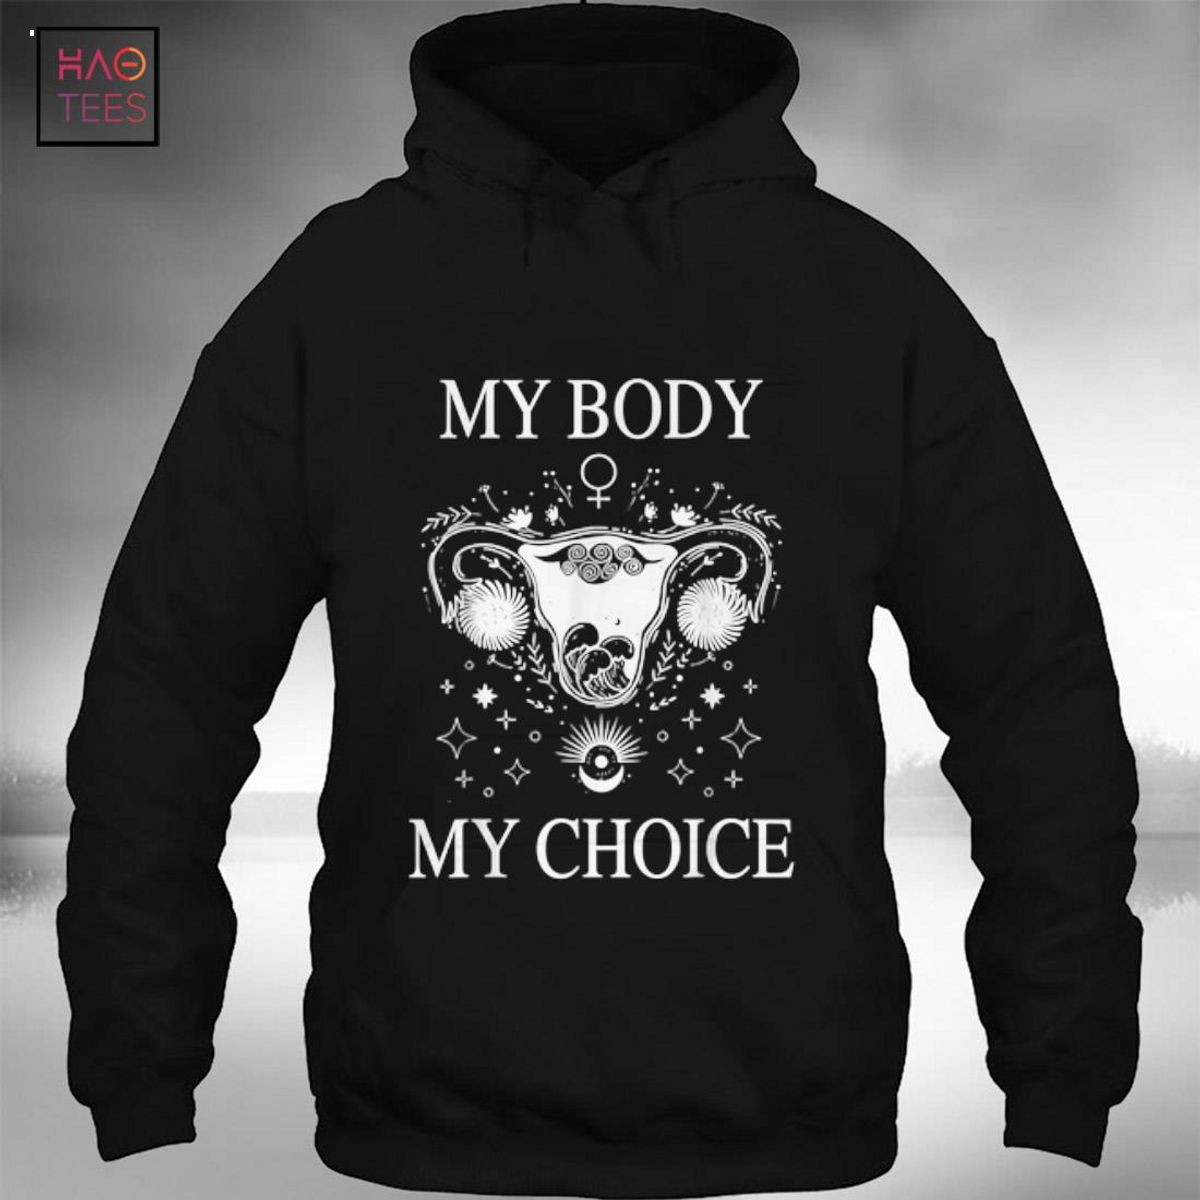 My Body My Choice Shirt Pro Choice Feminism Women's Rights Shirt